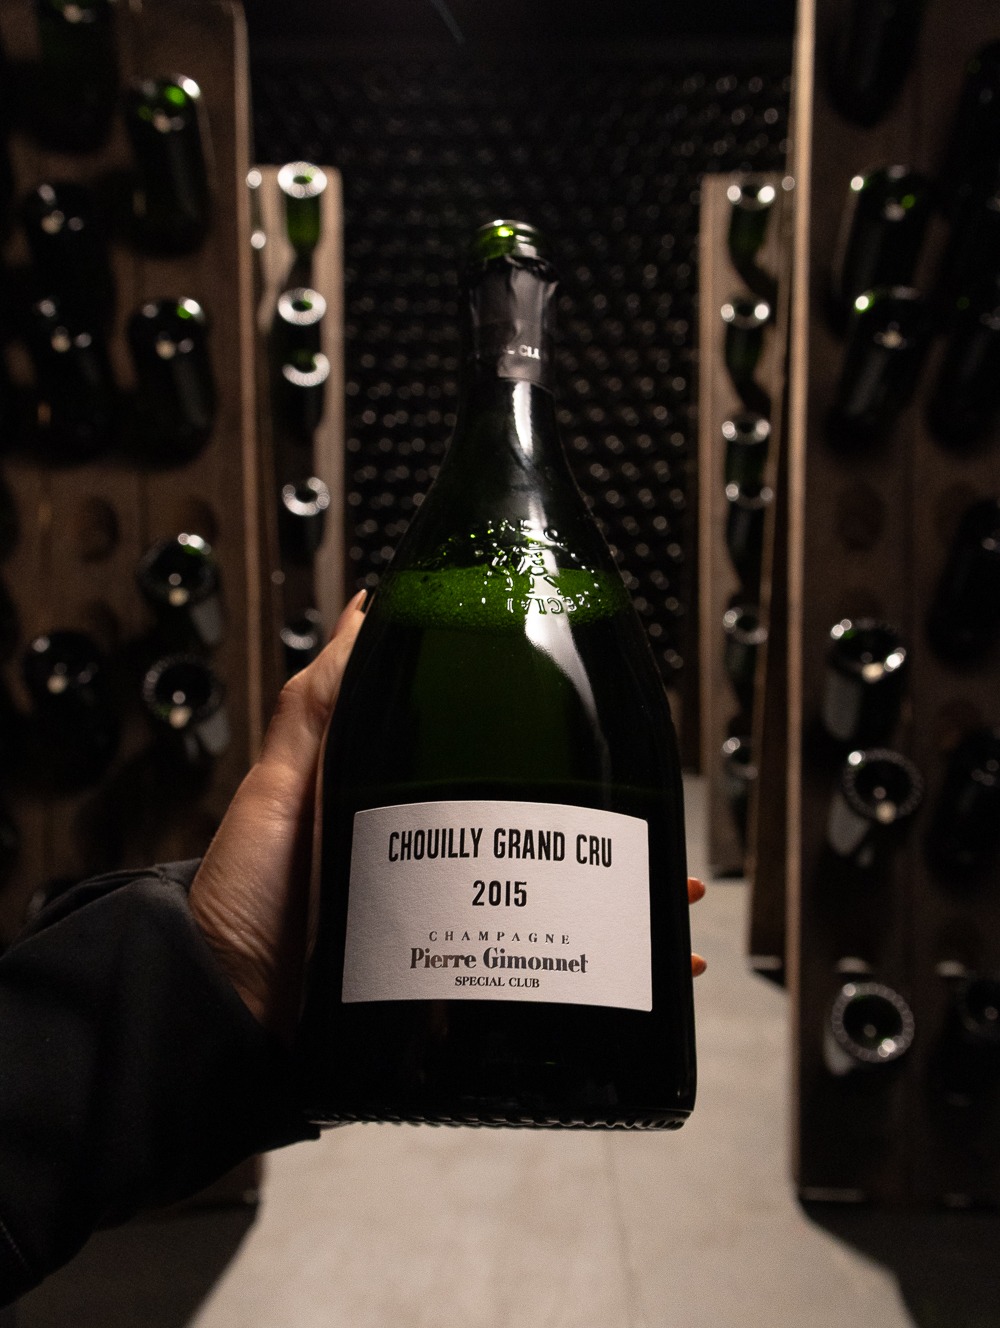 Champagne Pierre Gimonnet & Fils Blanc de Blancs Special Club Chouilly Grand Cru Extra Brut 2015